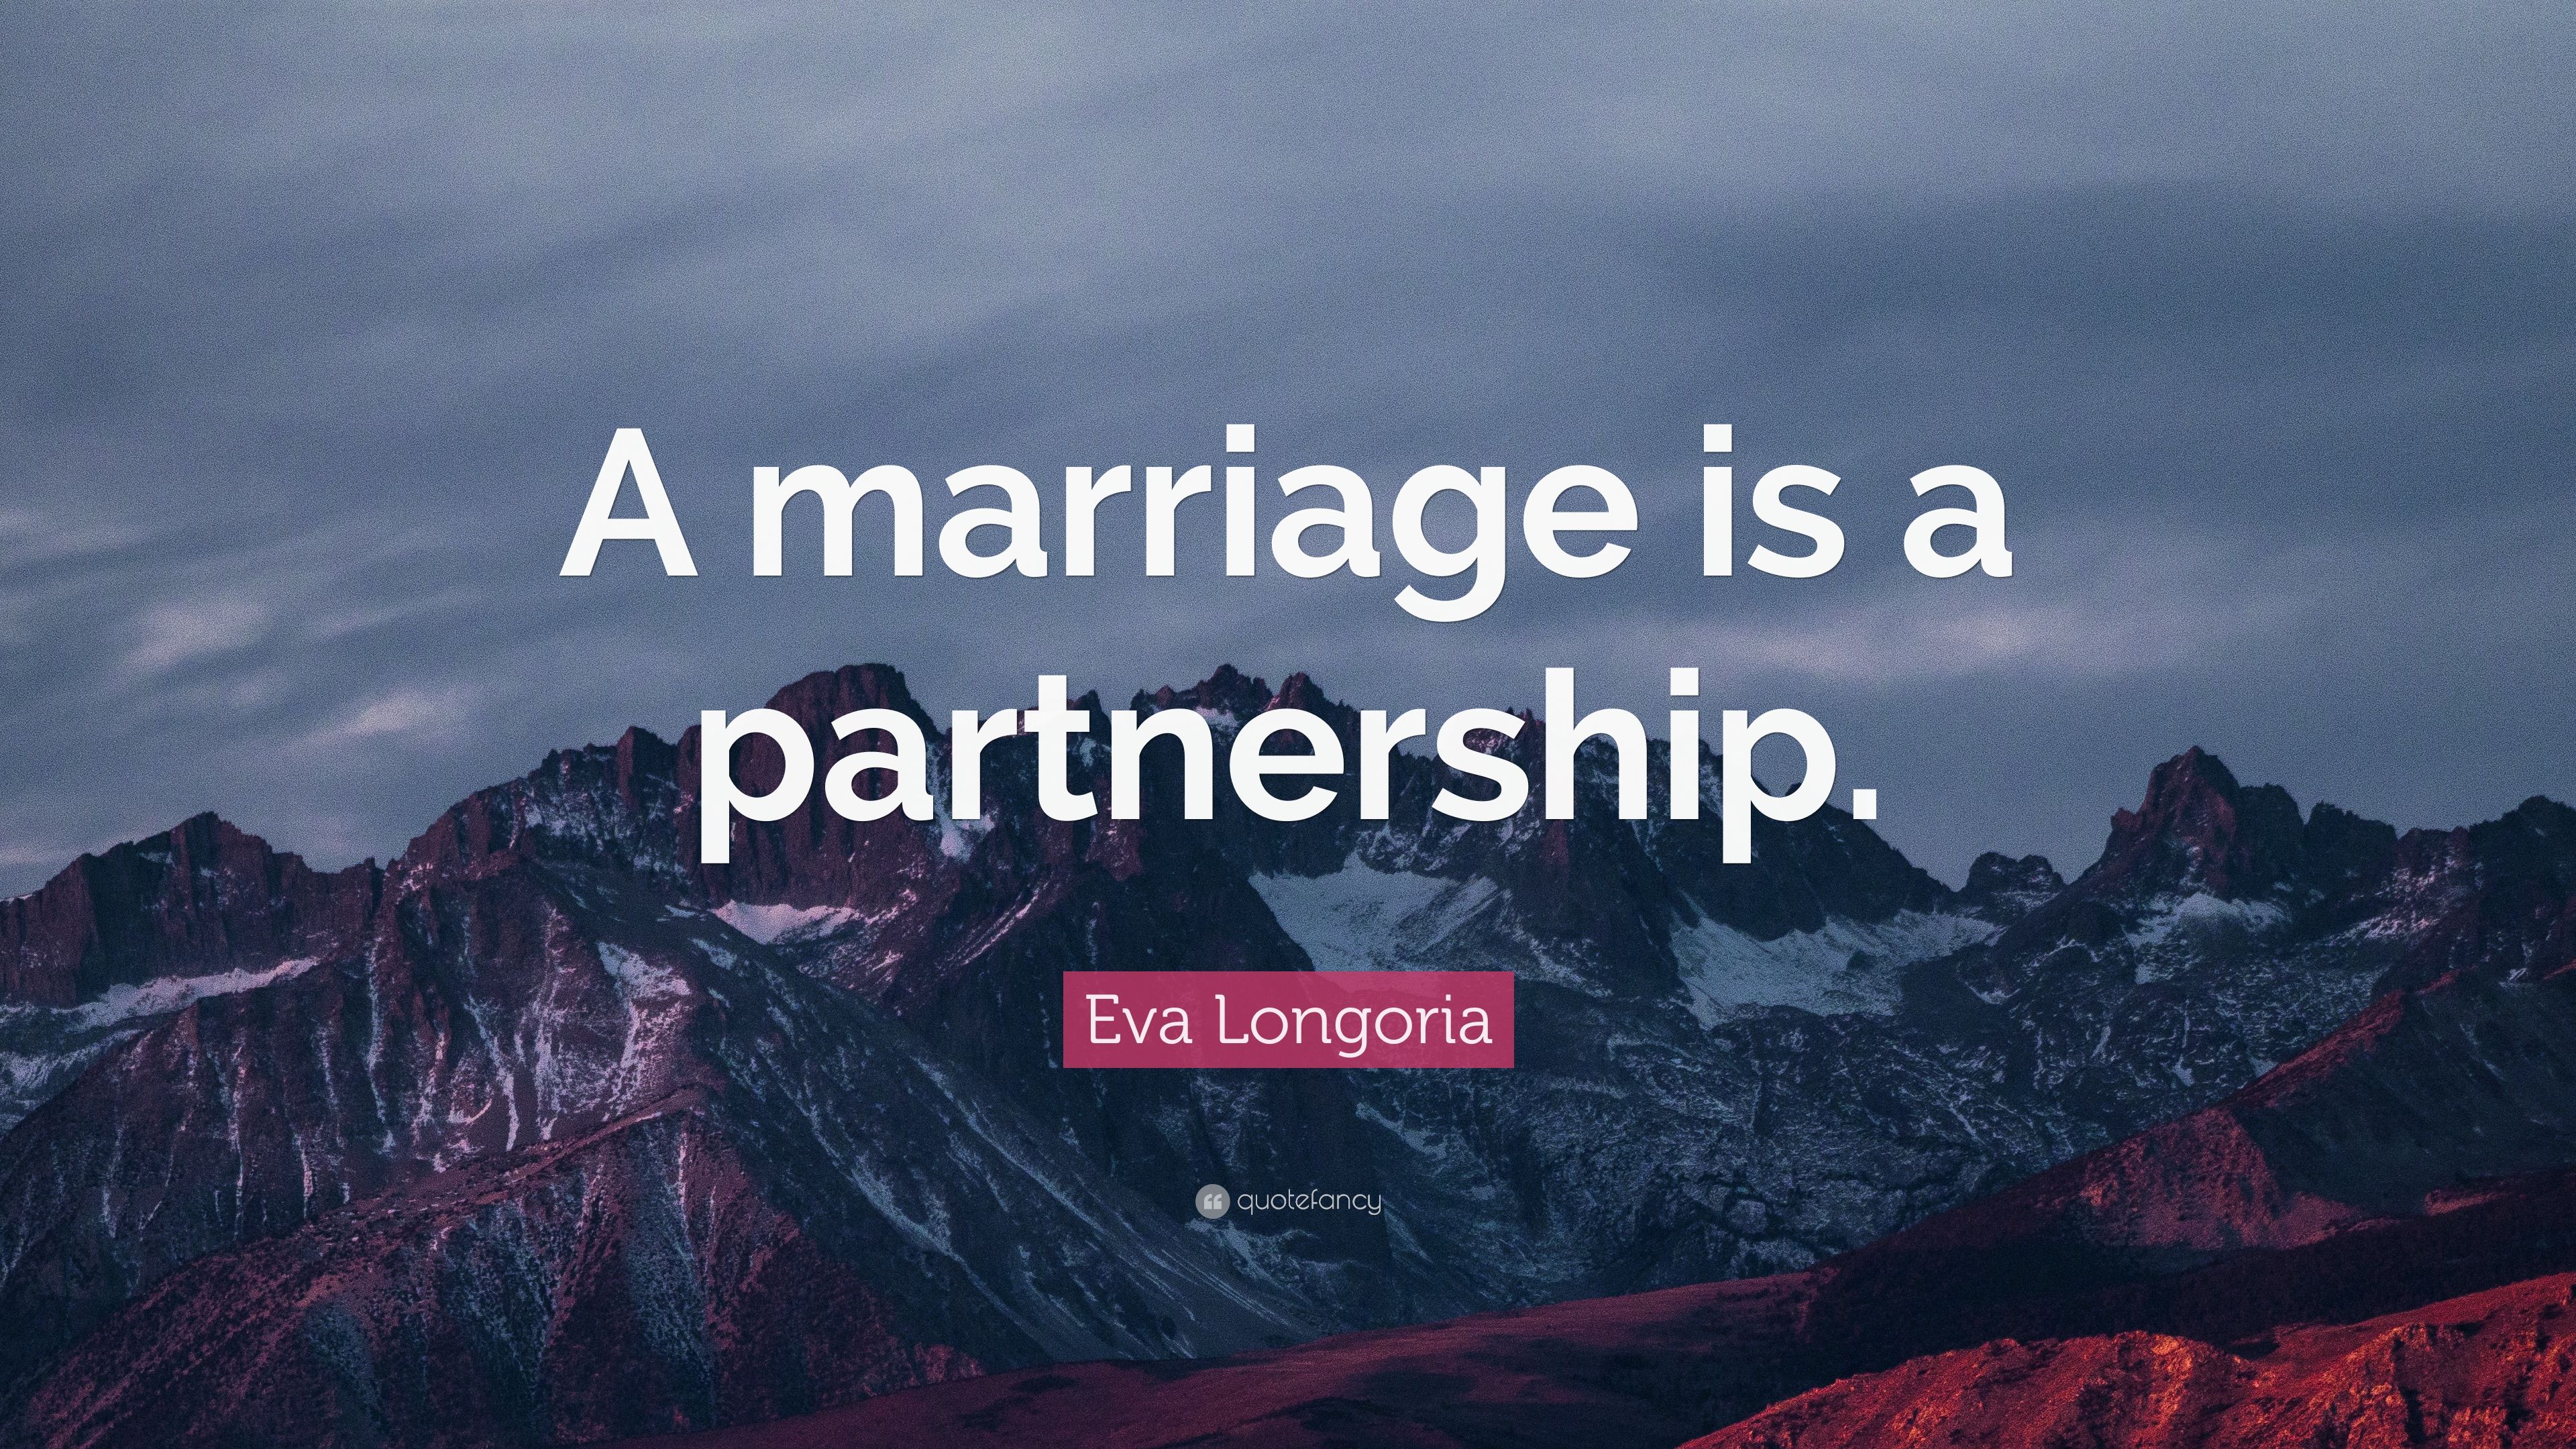 Eva Longoria Quote: “A marriage is a partnership.” (7 wallpaper)